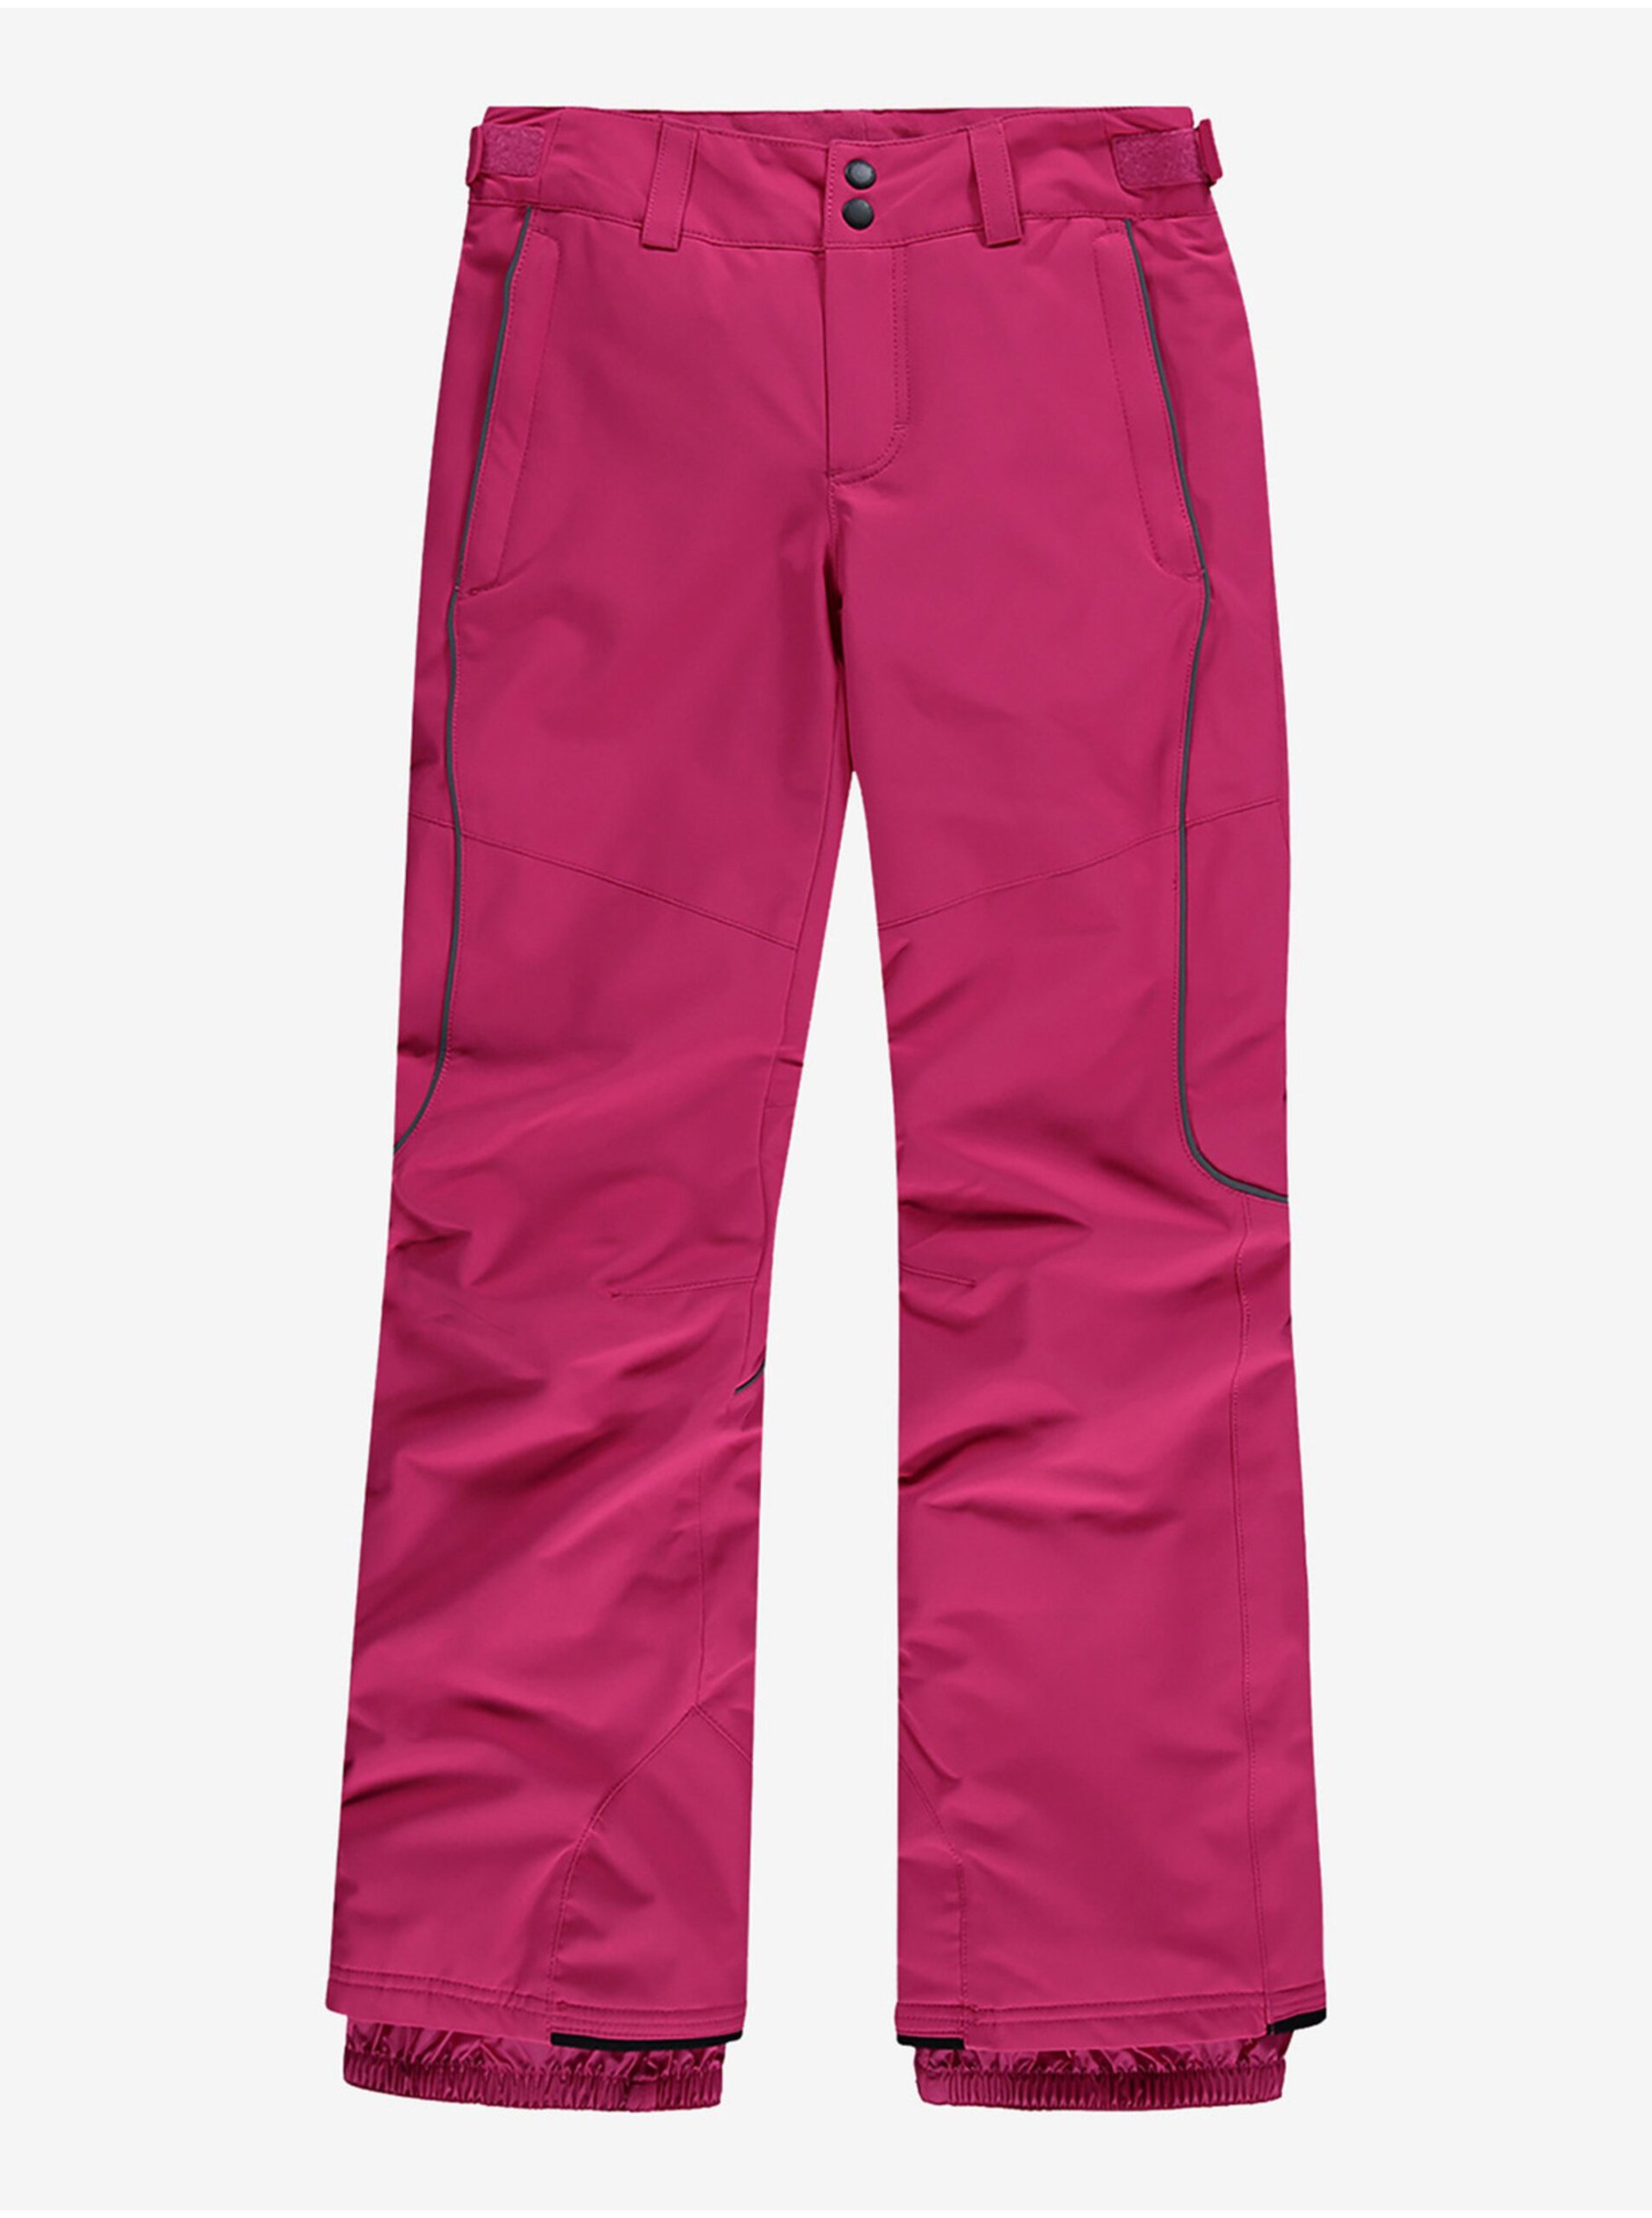 E-shop Růžové holčičí lyžařské/snowboardové kalhoty O'Neill Charm